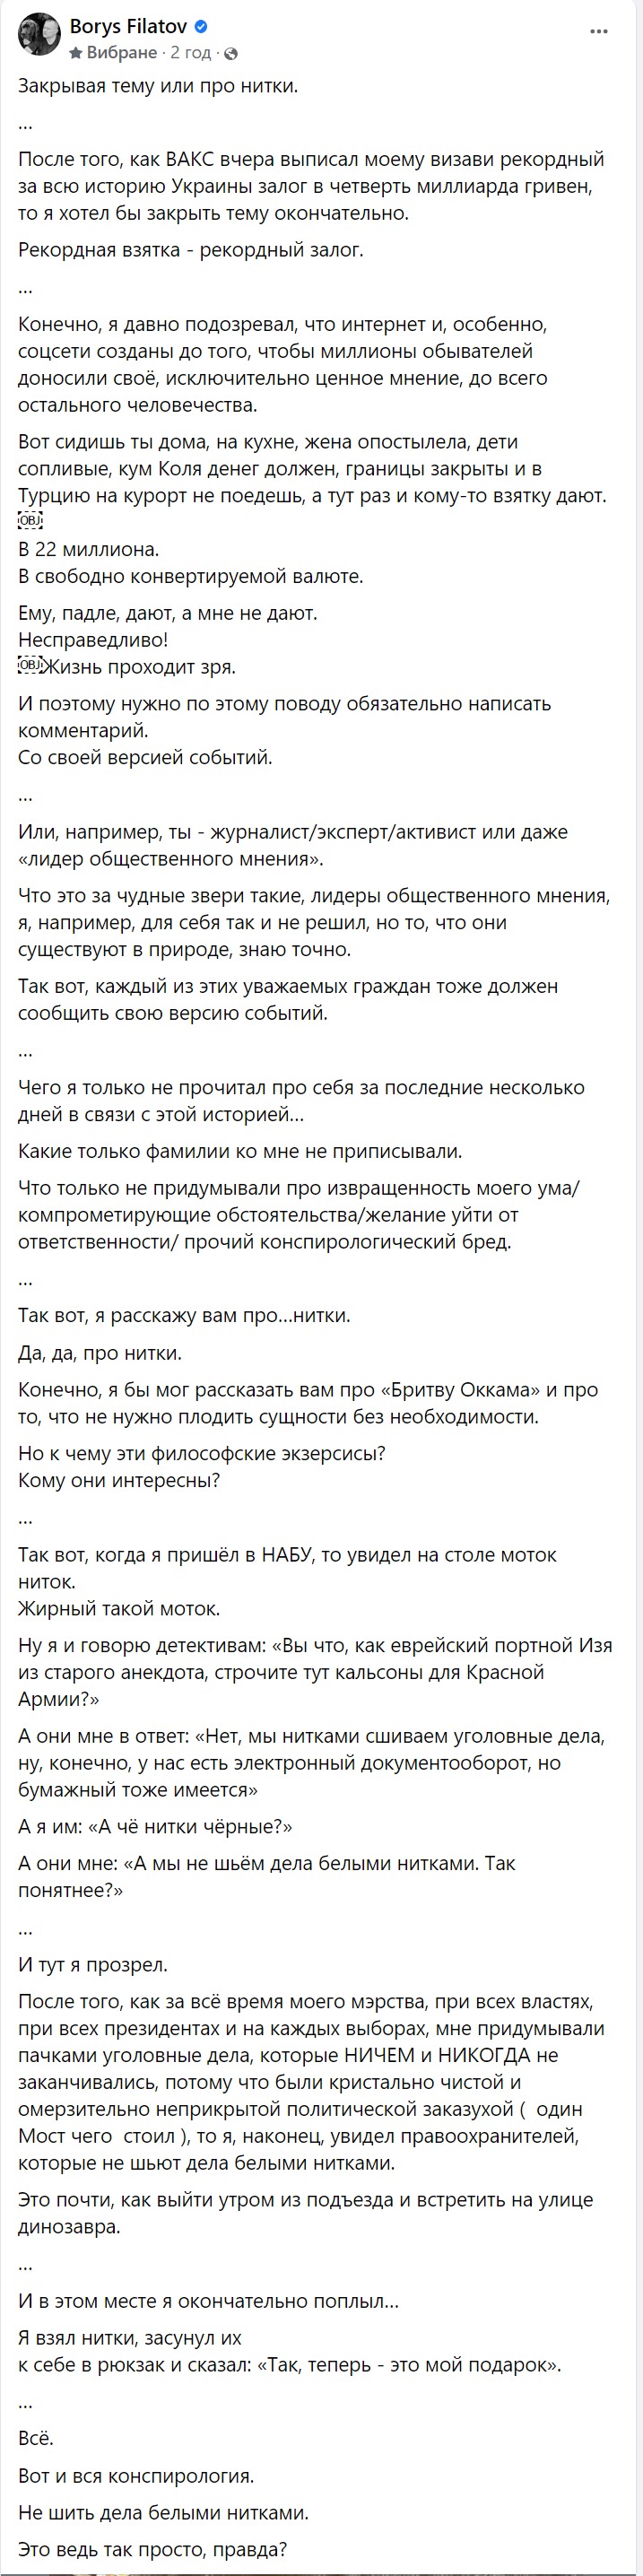 Коментар Бориса Філатова - || фото: facebook.com/profile.php?id=100002157183088